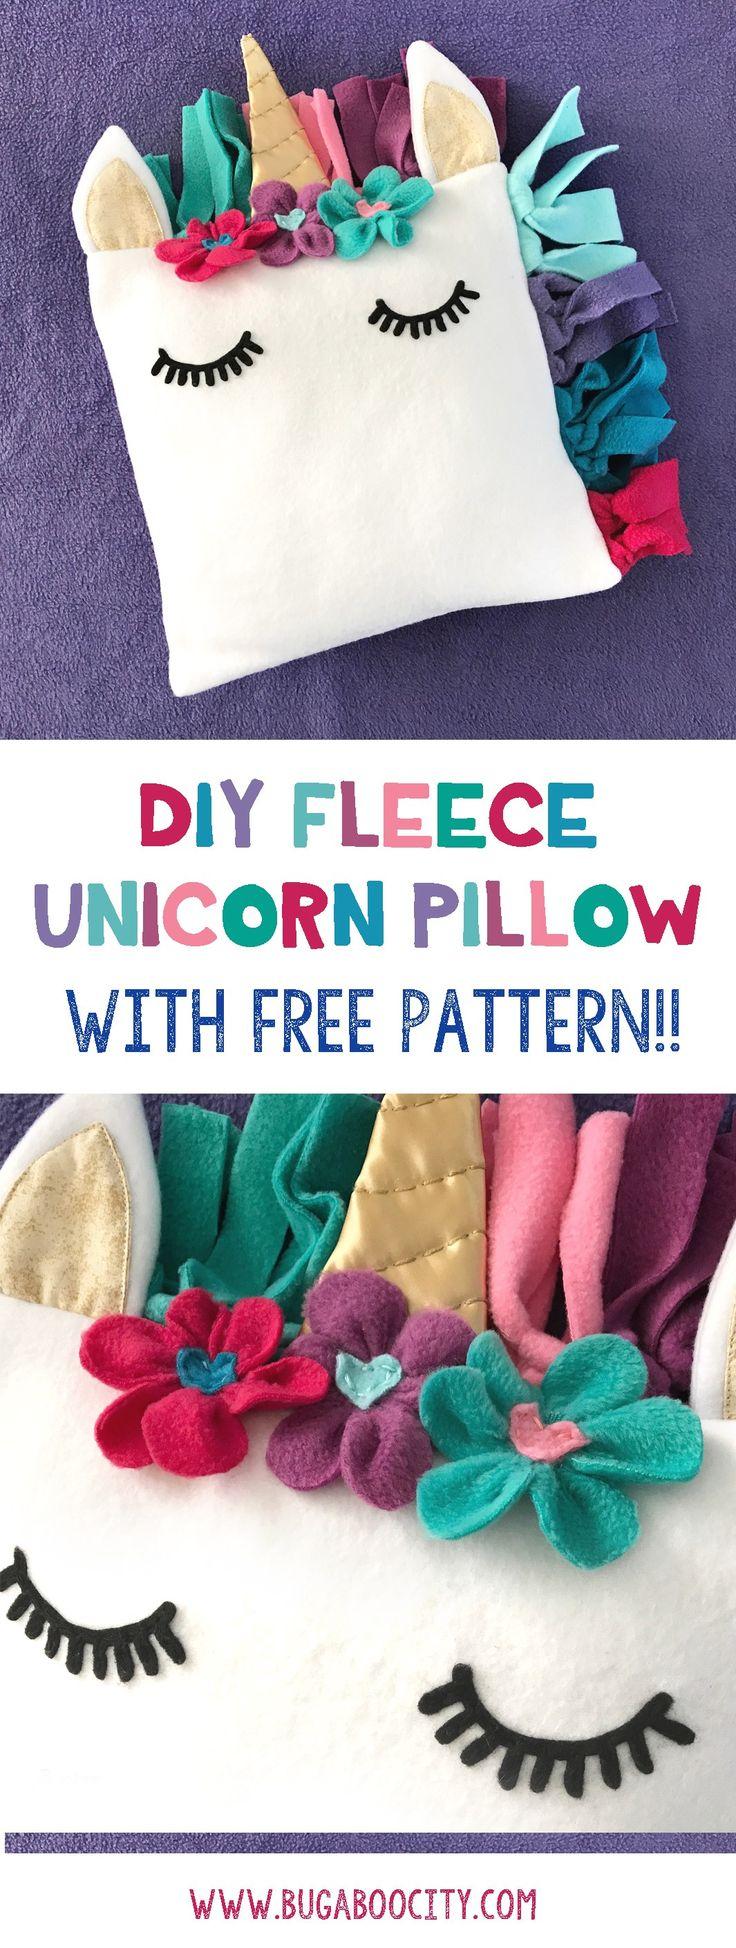 Wedding - DIY Fleece Unicorn Pillow With Free Pattern